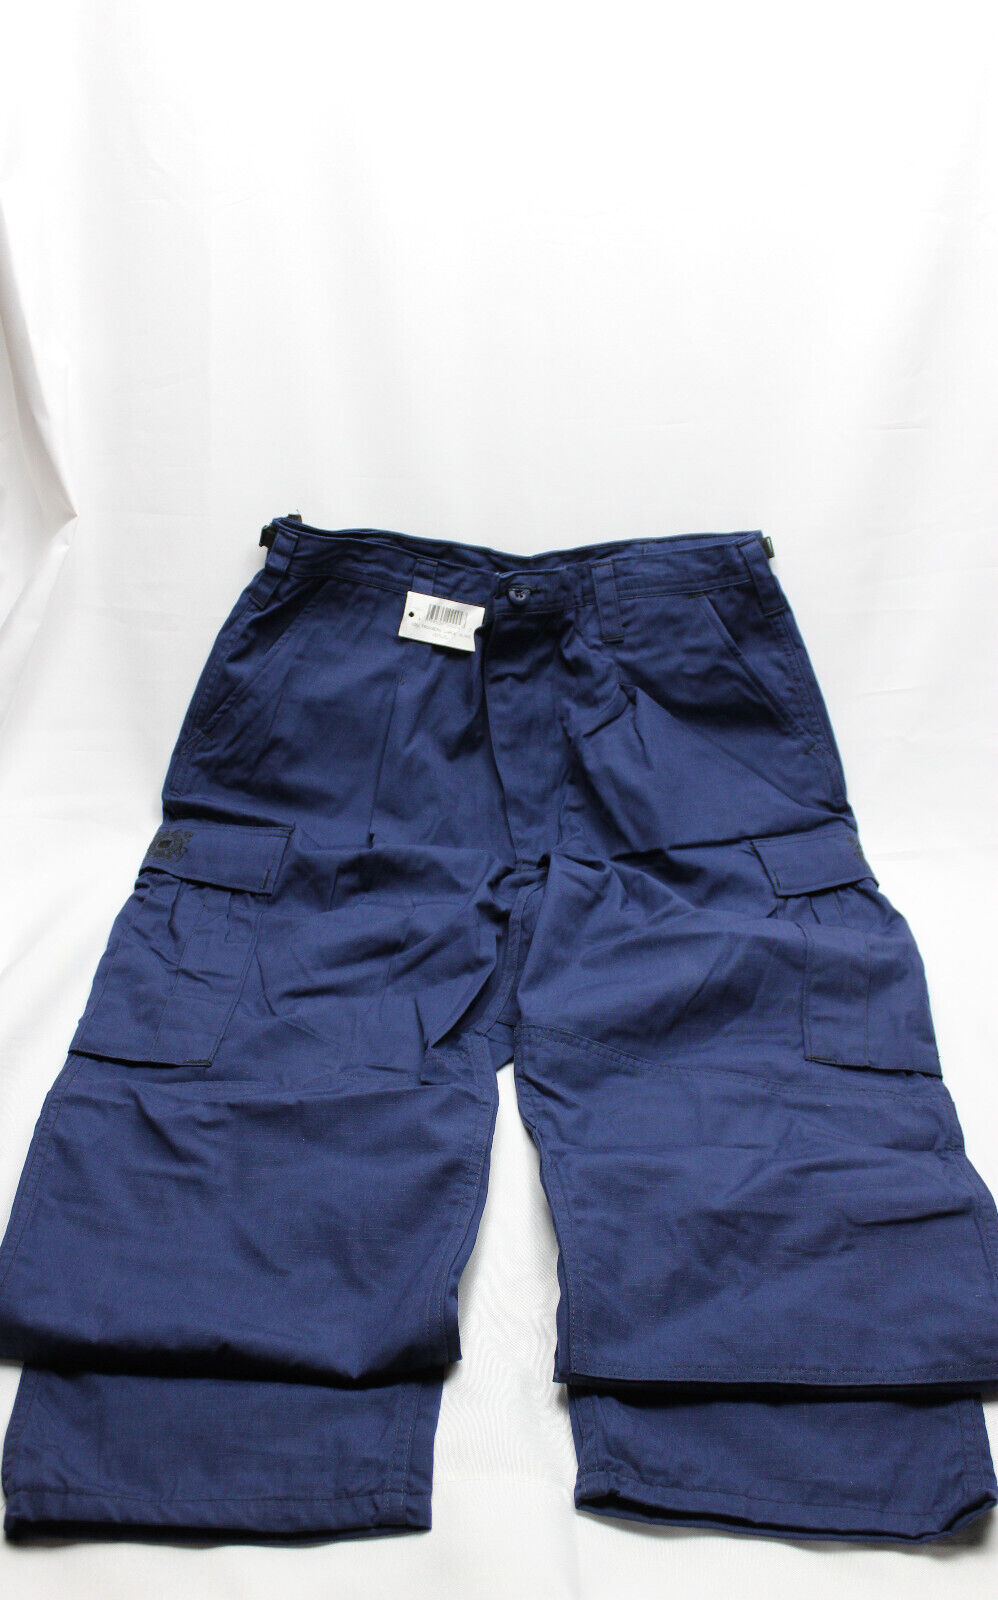 Coast Guard ODU Trousers Large Extra Long Navy Blue BDU Uniform Pants